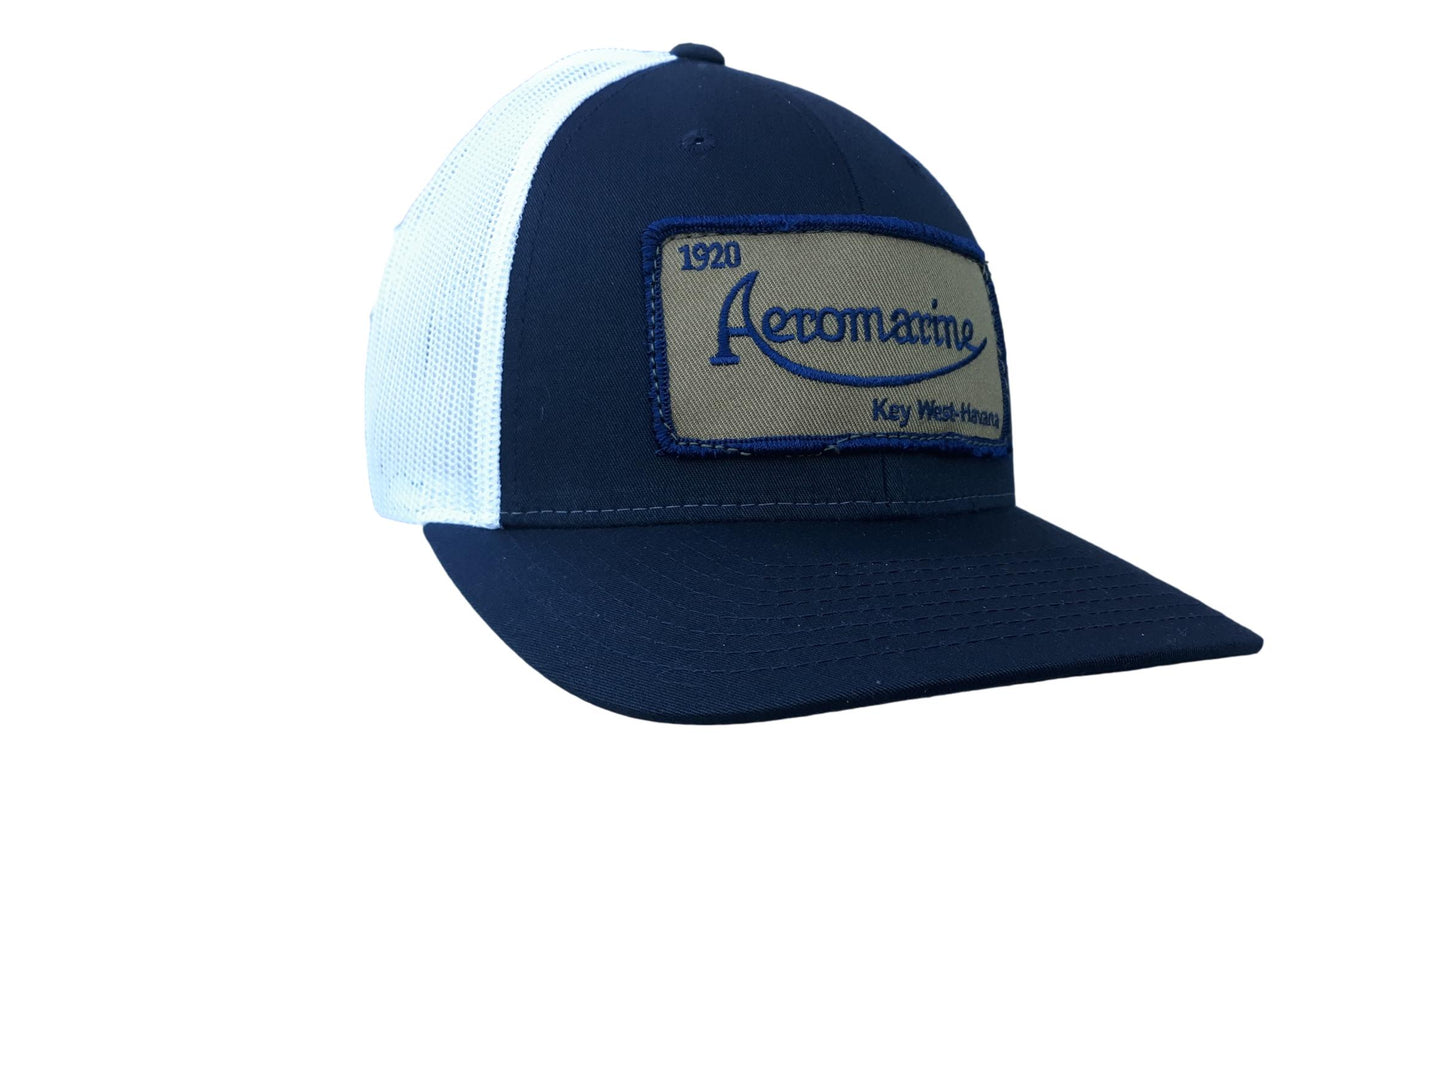 Aeromarine trucker cap snap back